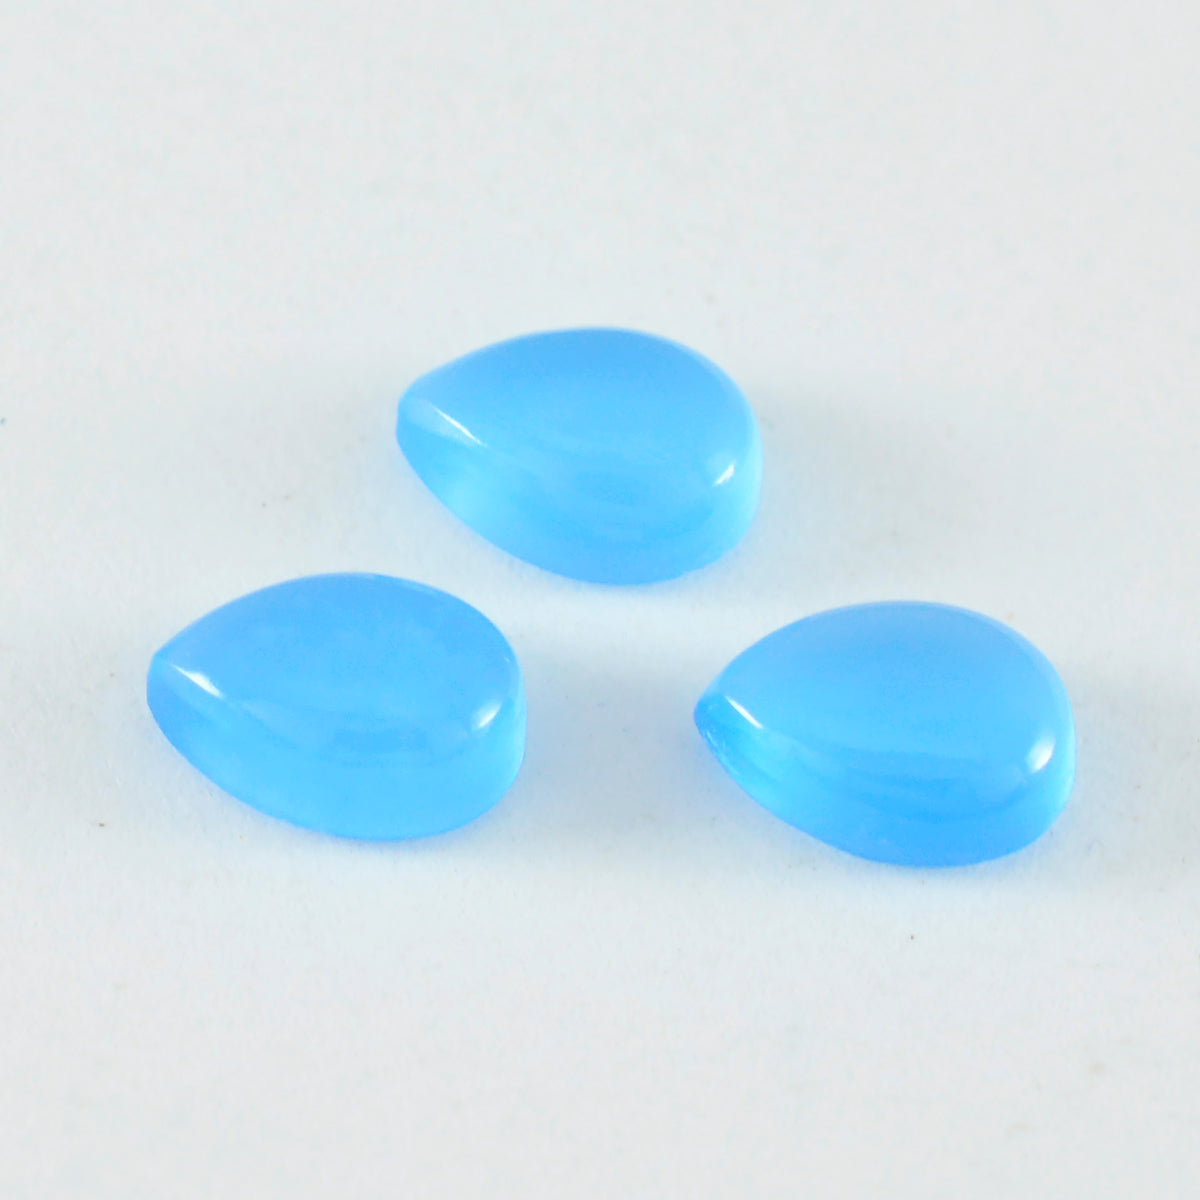 Riyogems 1PC Blue Chalcedony Cabochon 7x10 mm Pear Shape A+ Quality Loose Stone